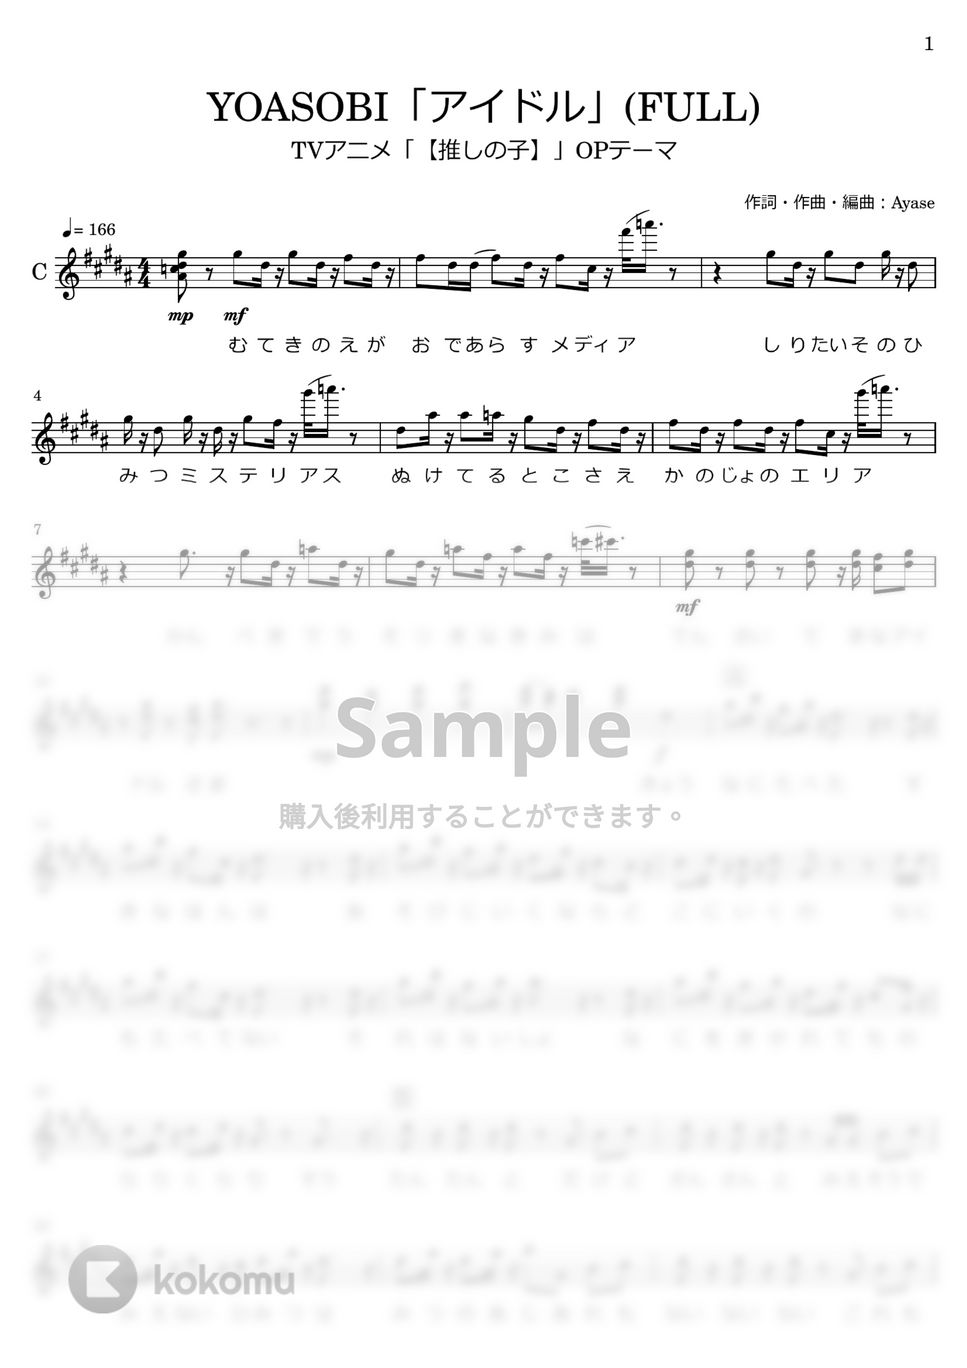 YOASOBI - アイドル (C と B♭向け譜面) by mt08